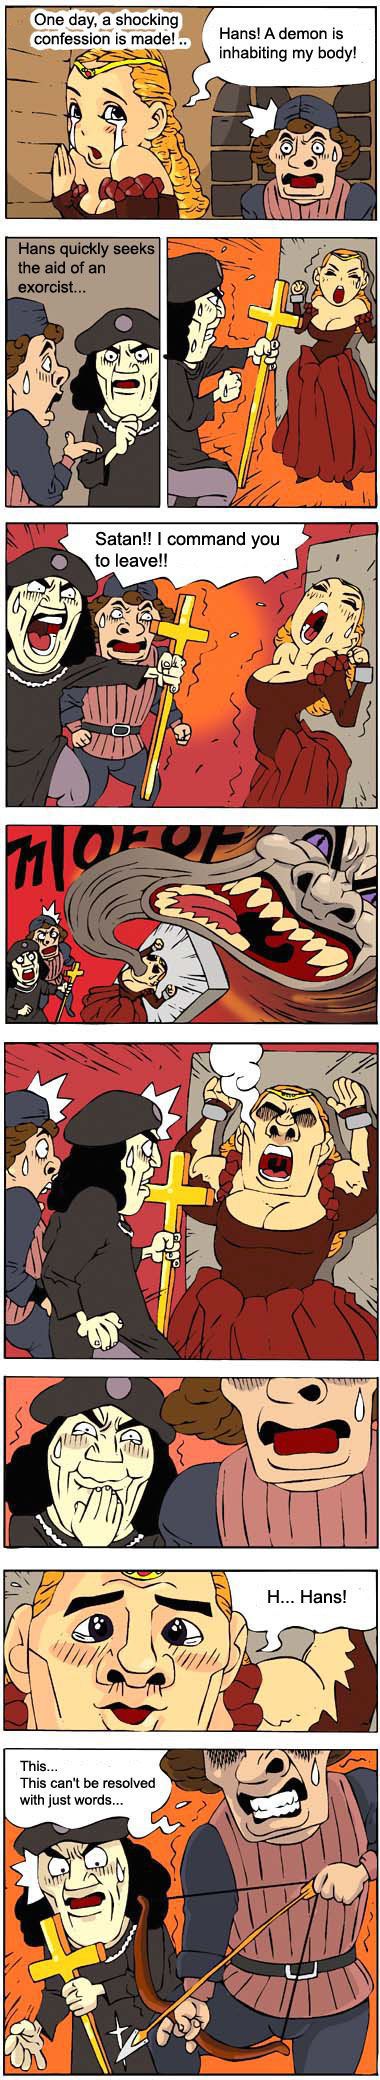 Funny Korean Comic Strips (41 pics)